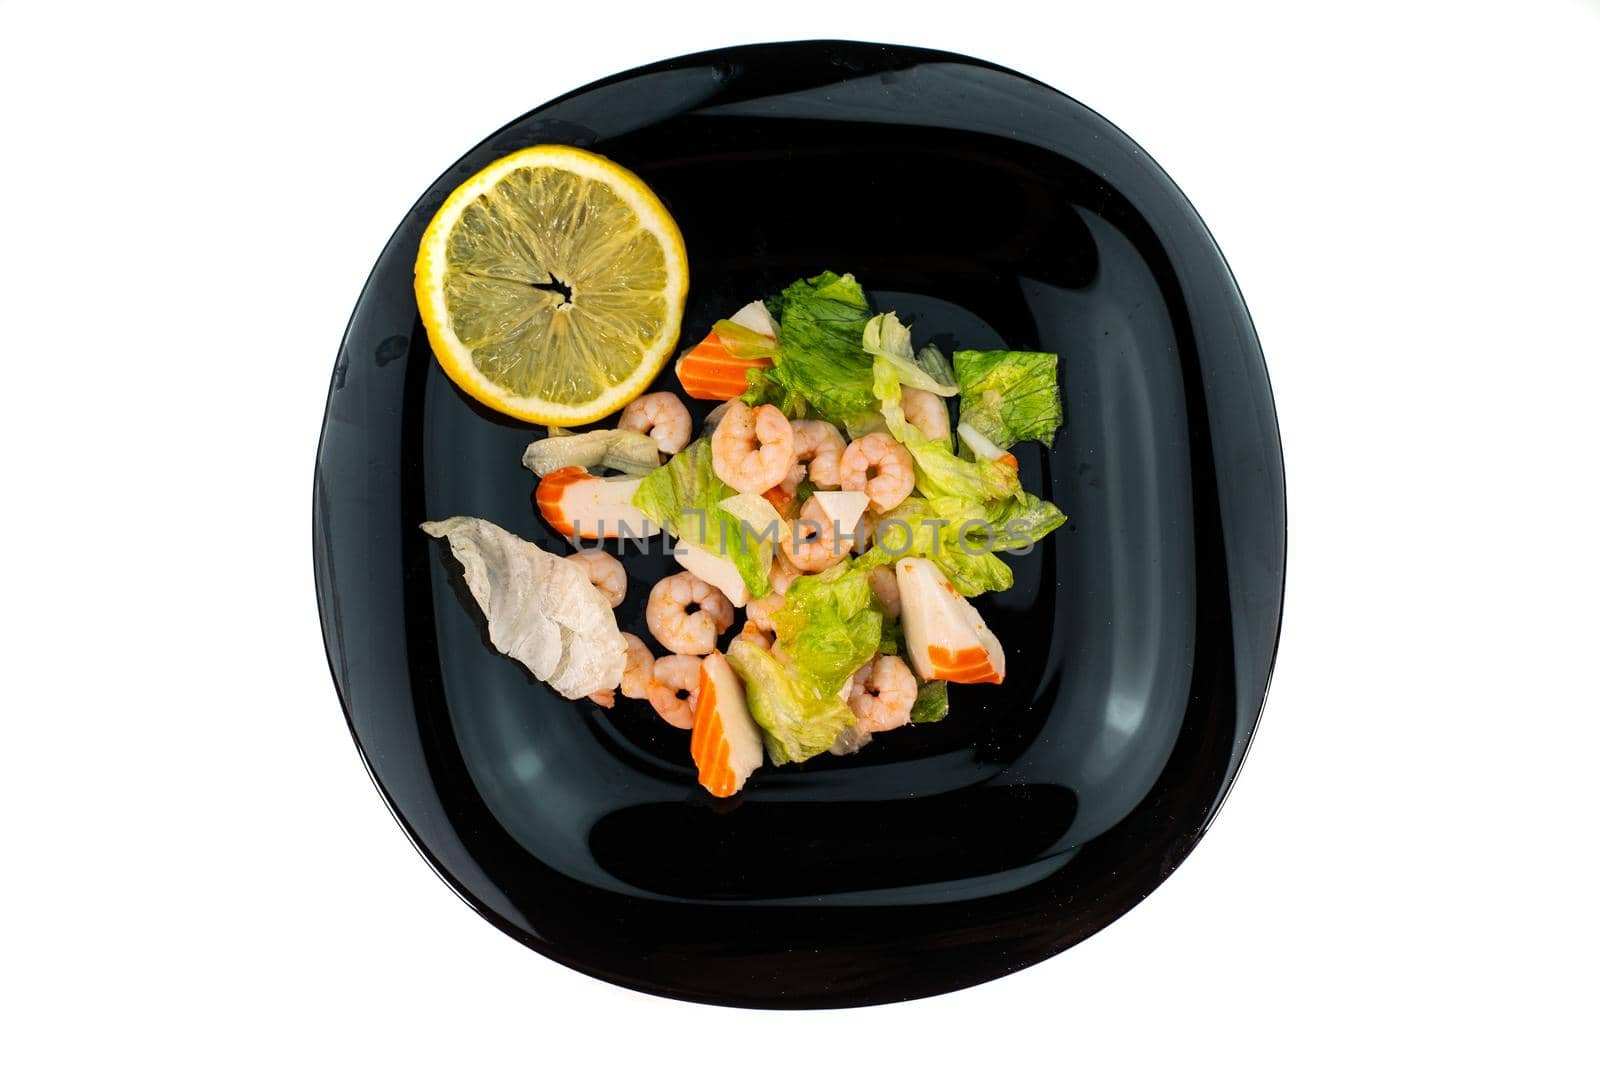 shrimp and surimi salad plate by carfedeph